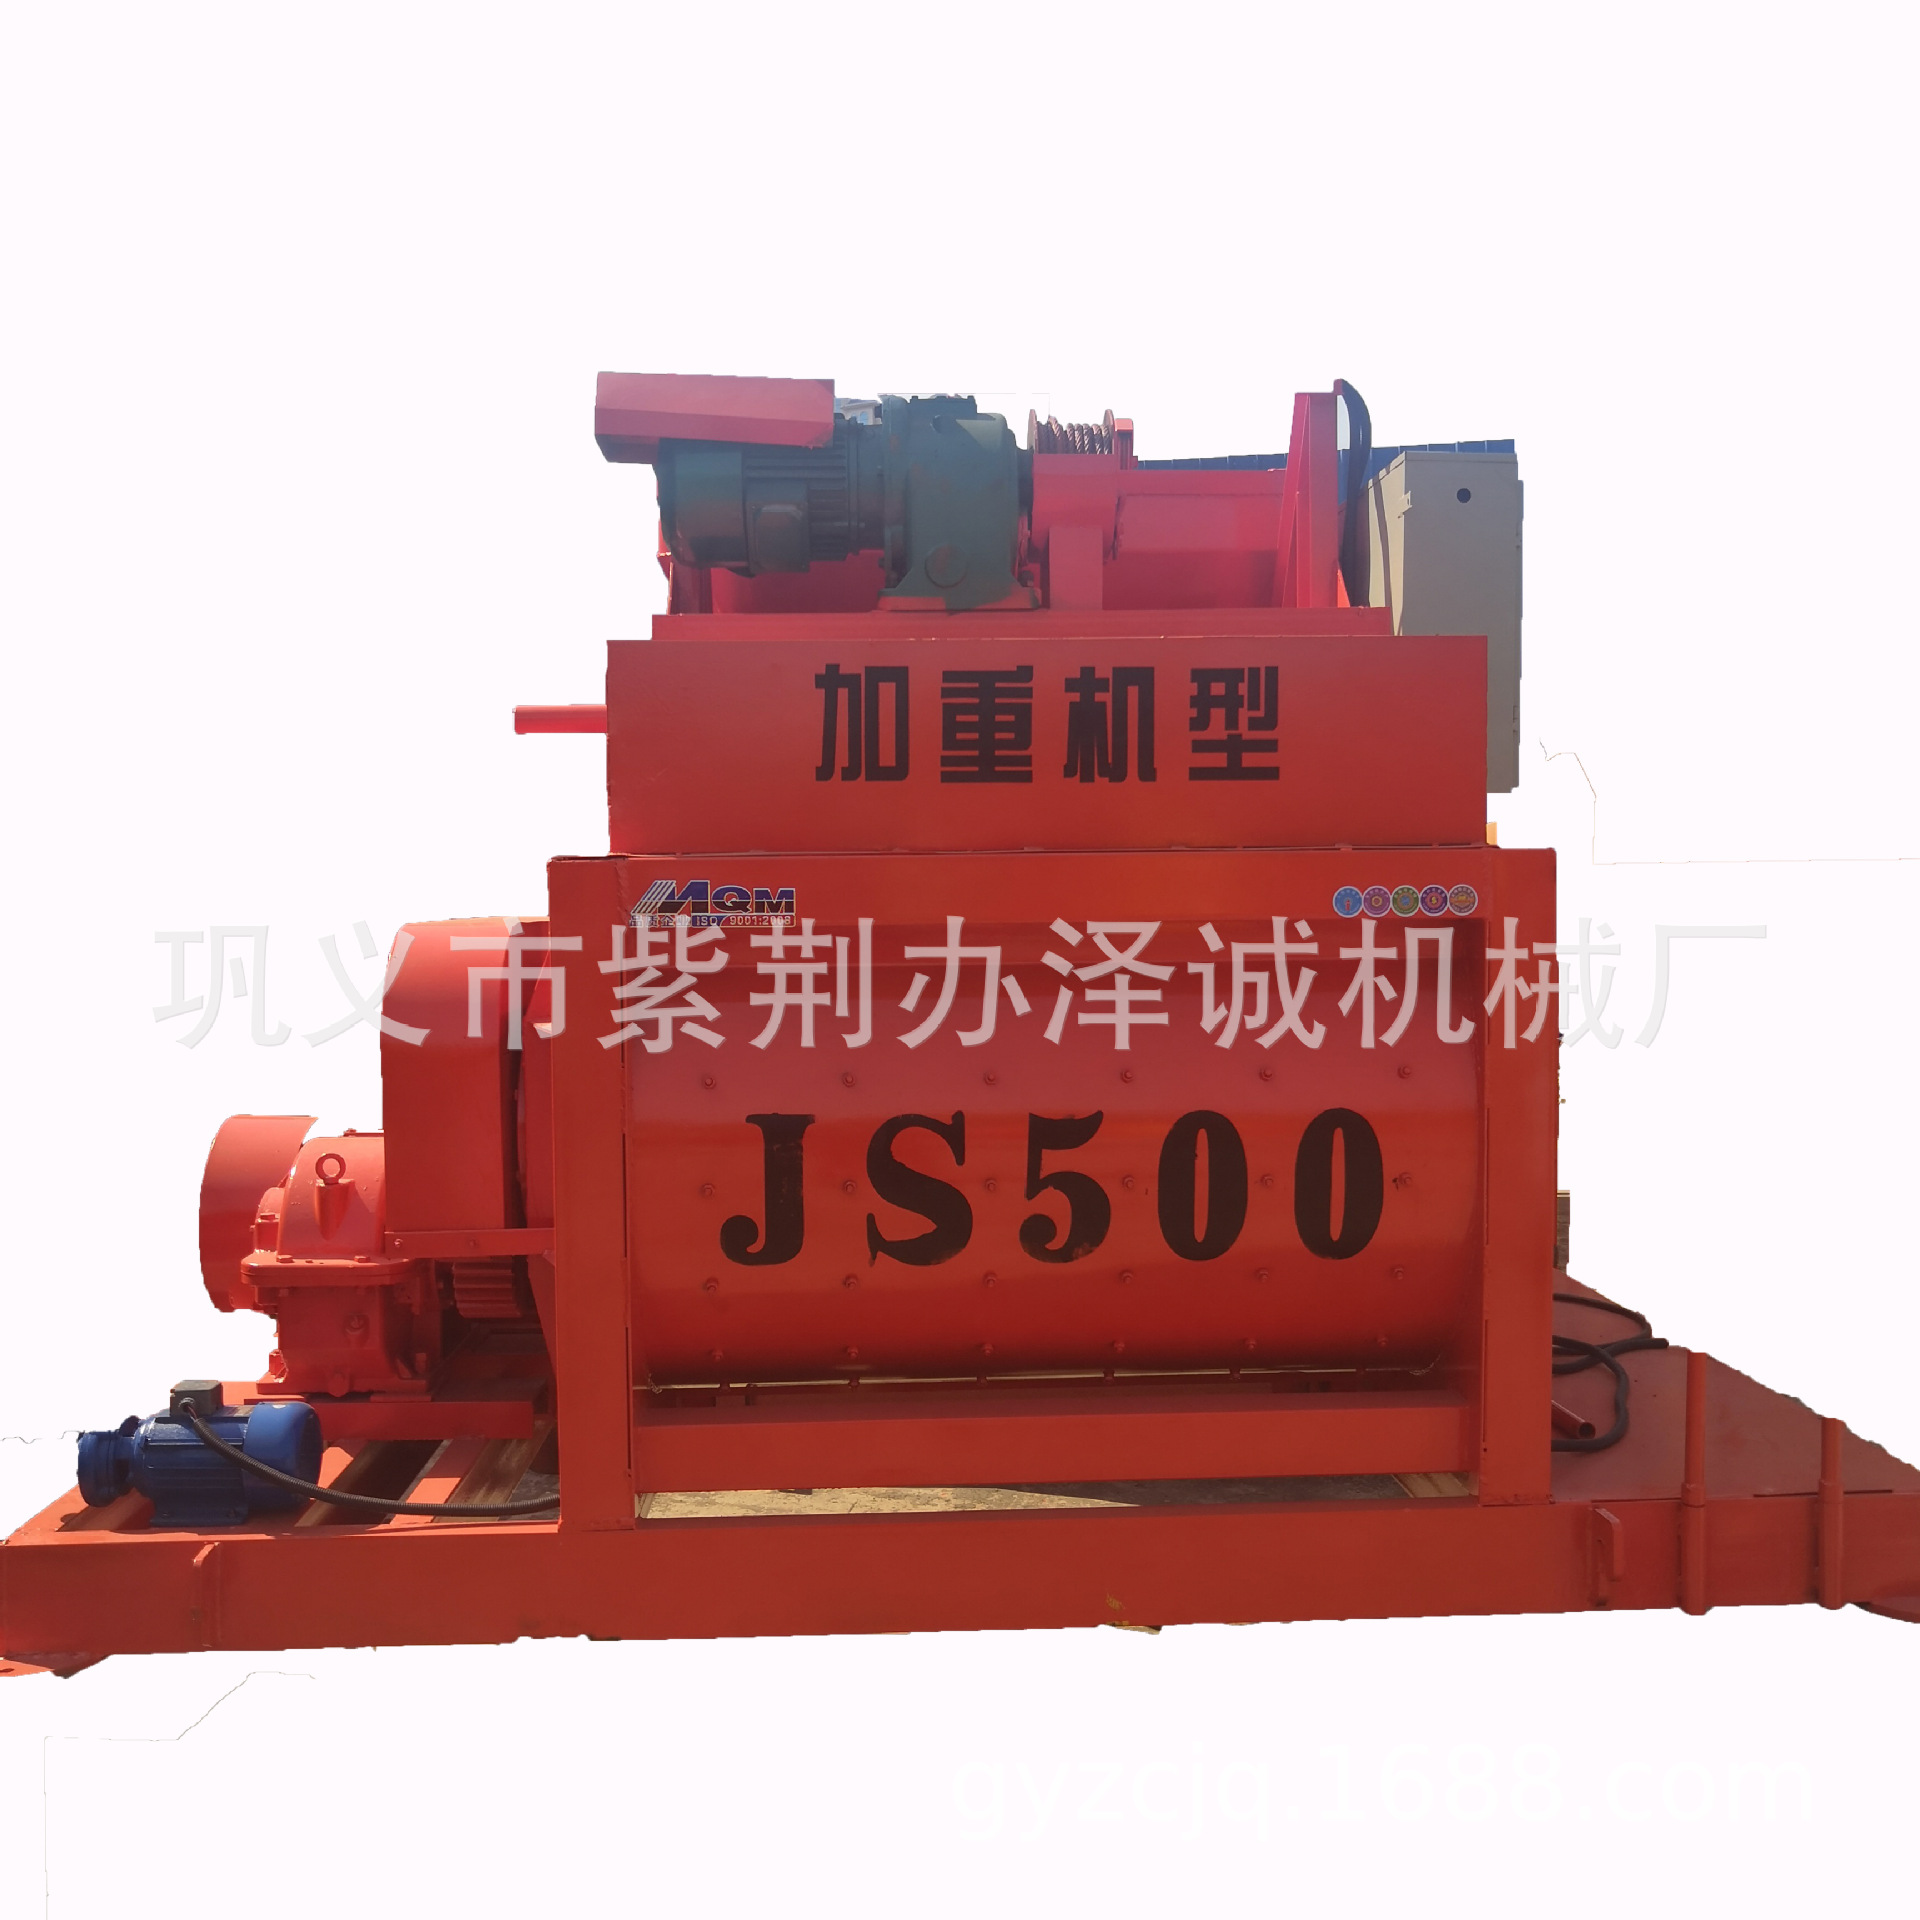 JS500强制混凝土搅拌机双轴强制搅拌机厂家促销中1